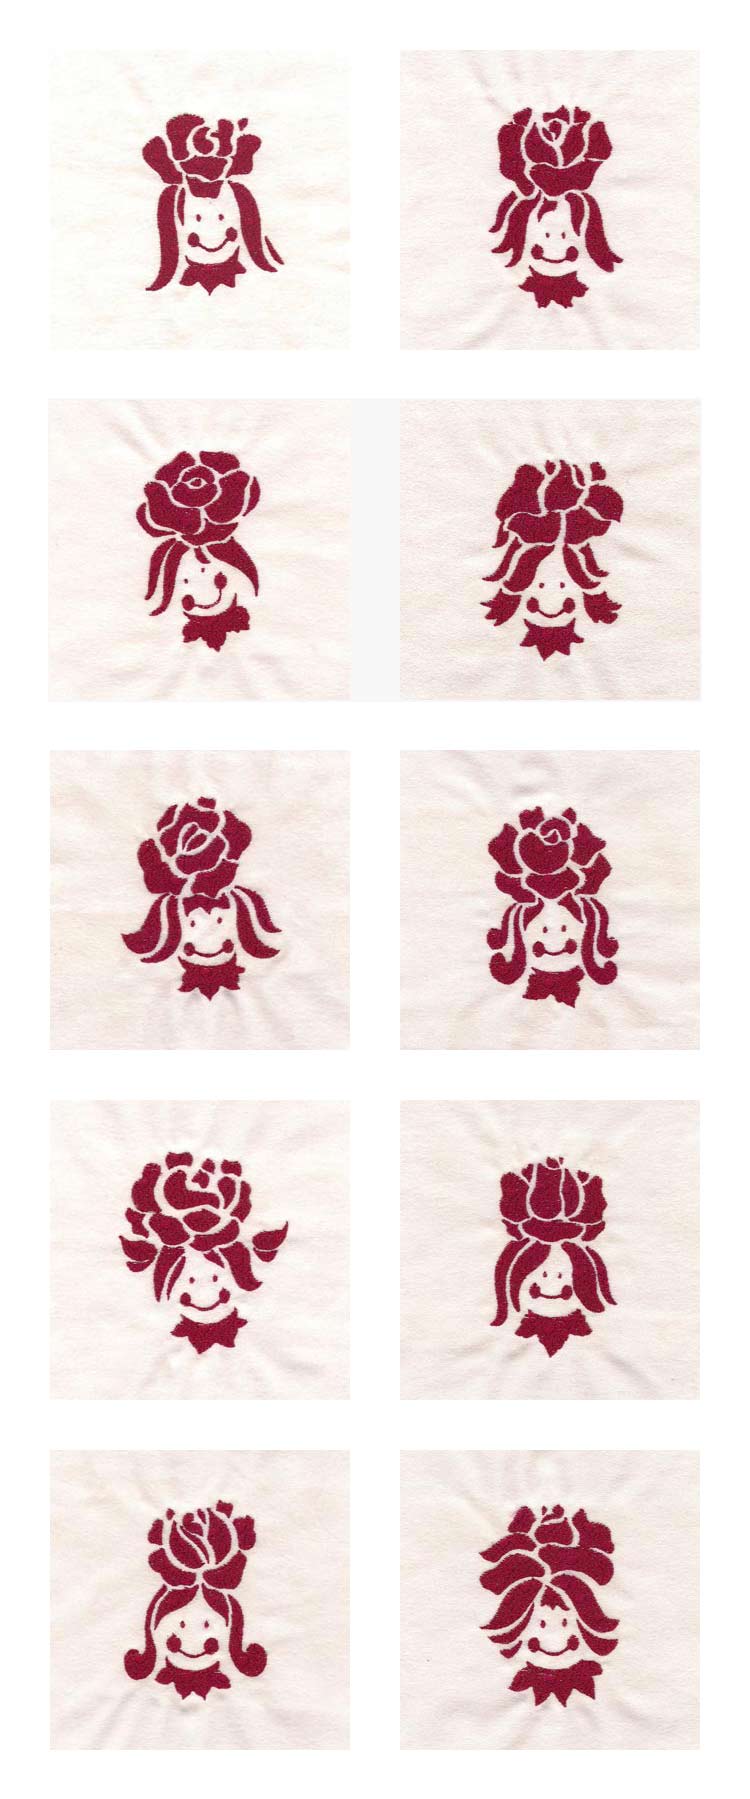 Rose Girls Embroidery Machine Design Details